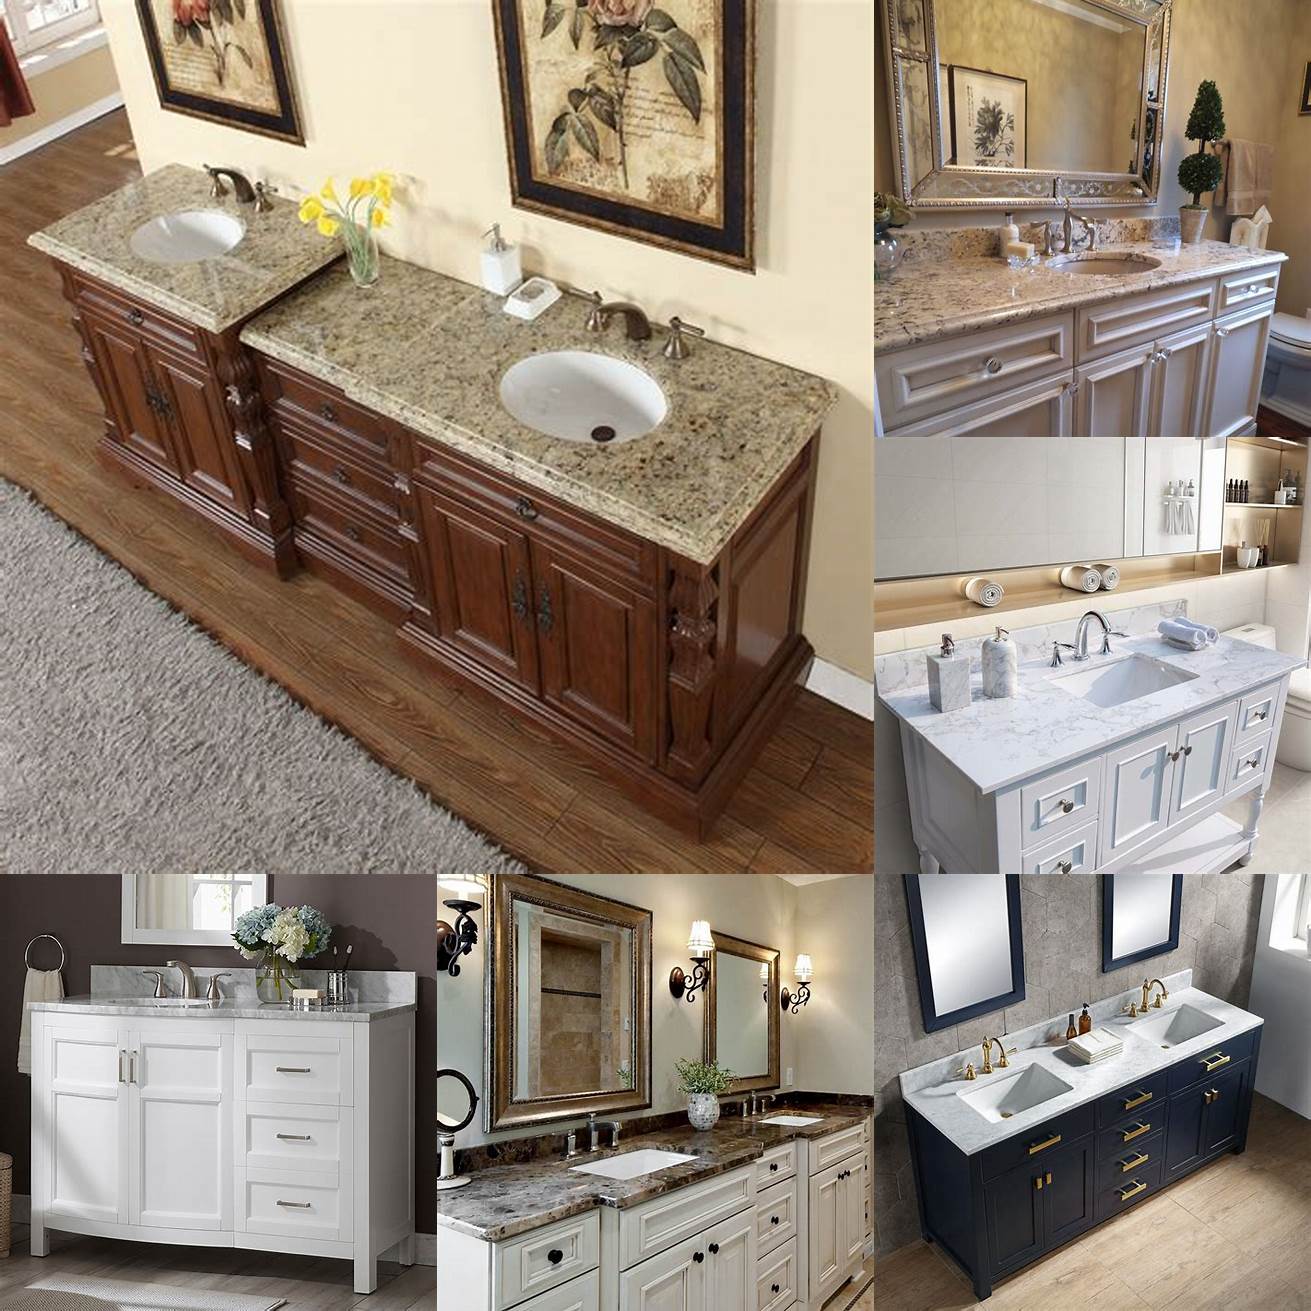 3 Double sink vanity with marble countertops